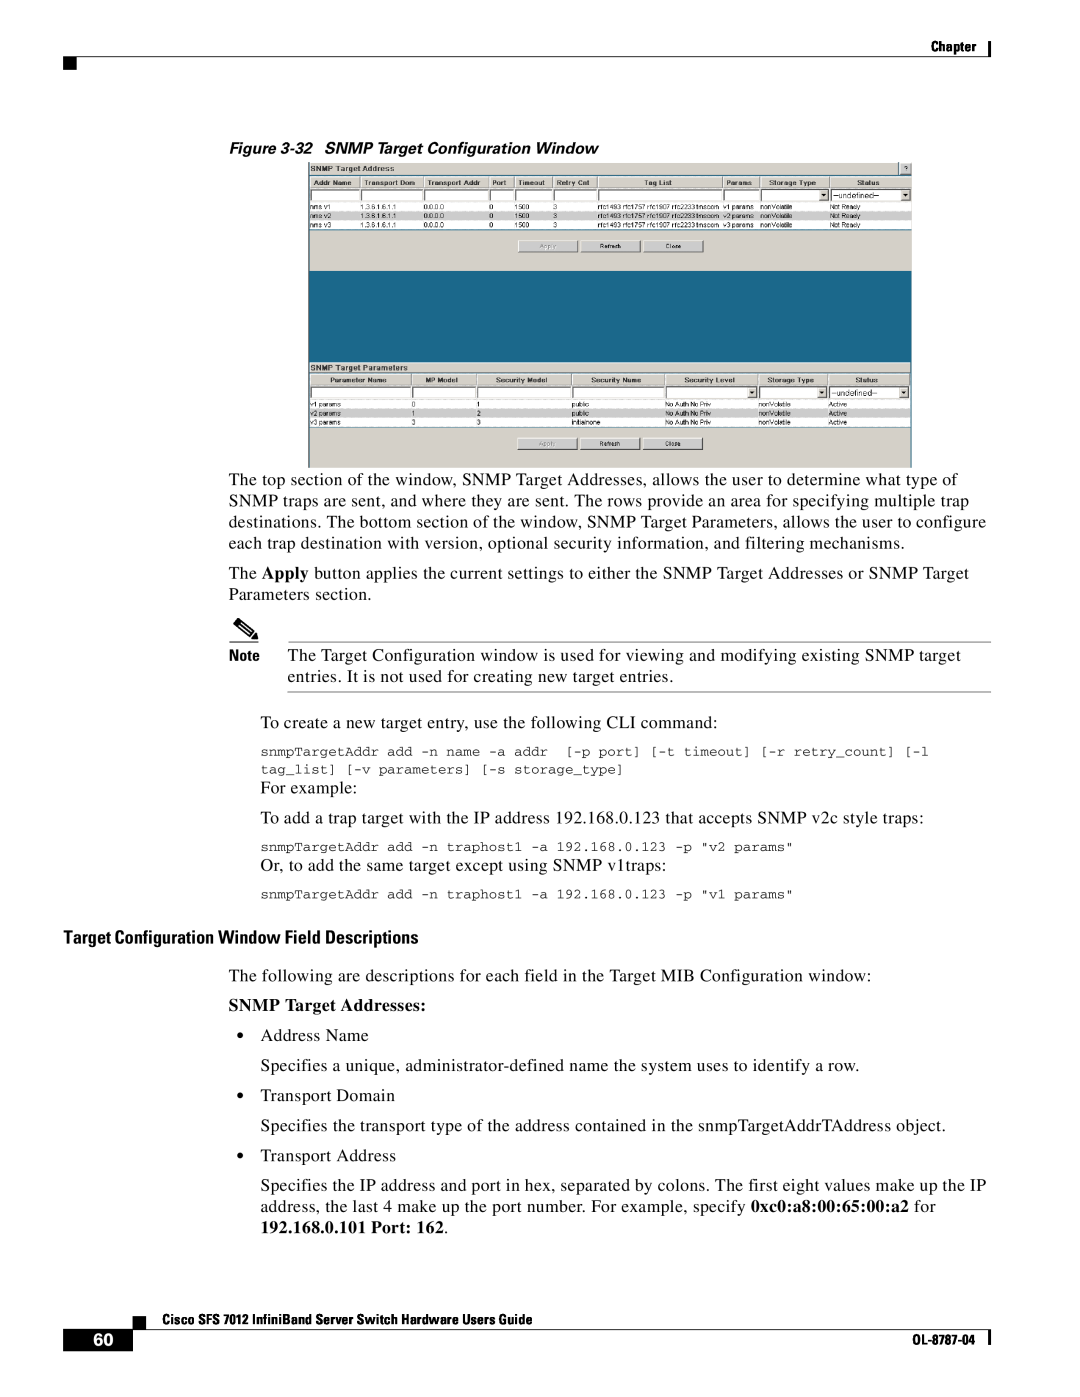 Cisco Systems SFS 7012 manual Target Configuration Window Field Descriptions, SNMP Target Addresses 